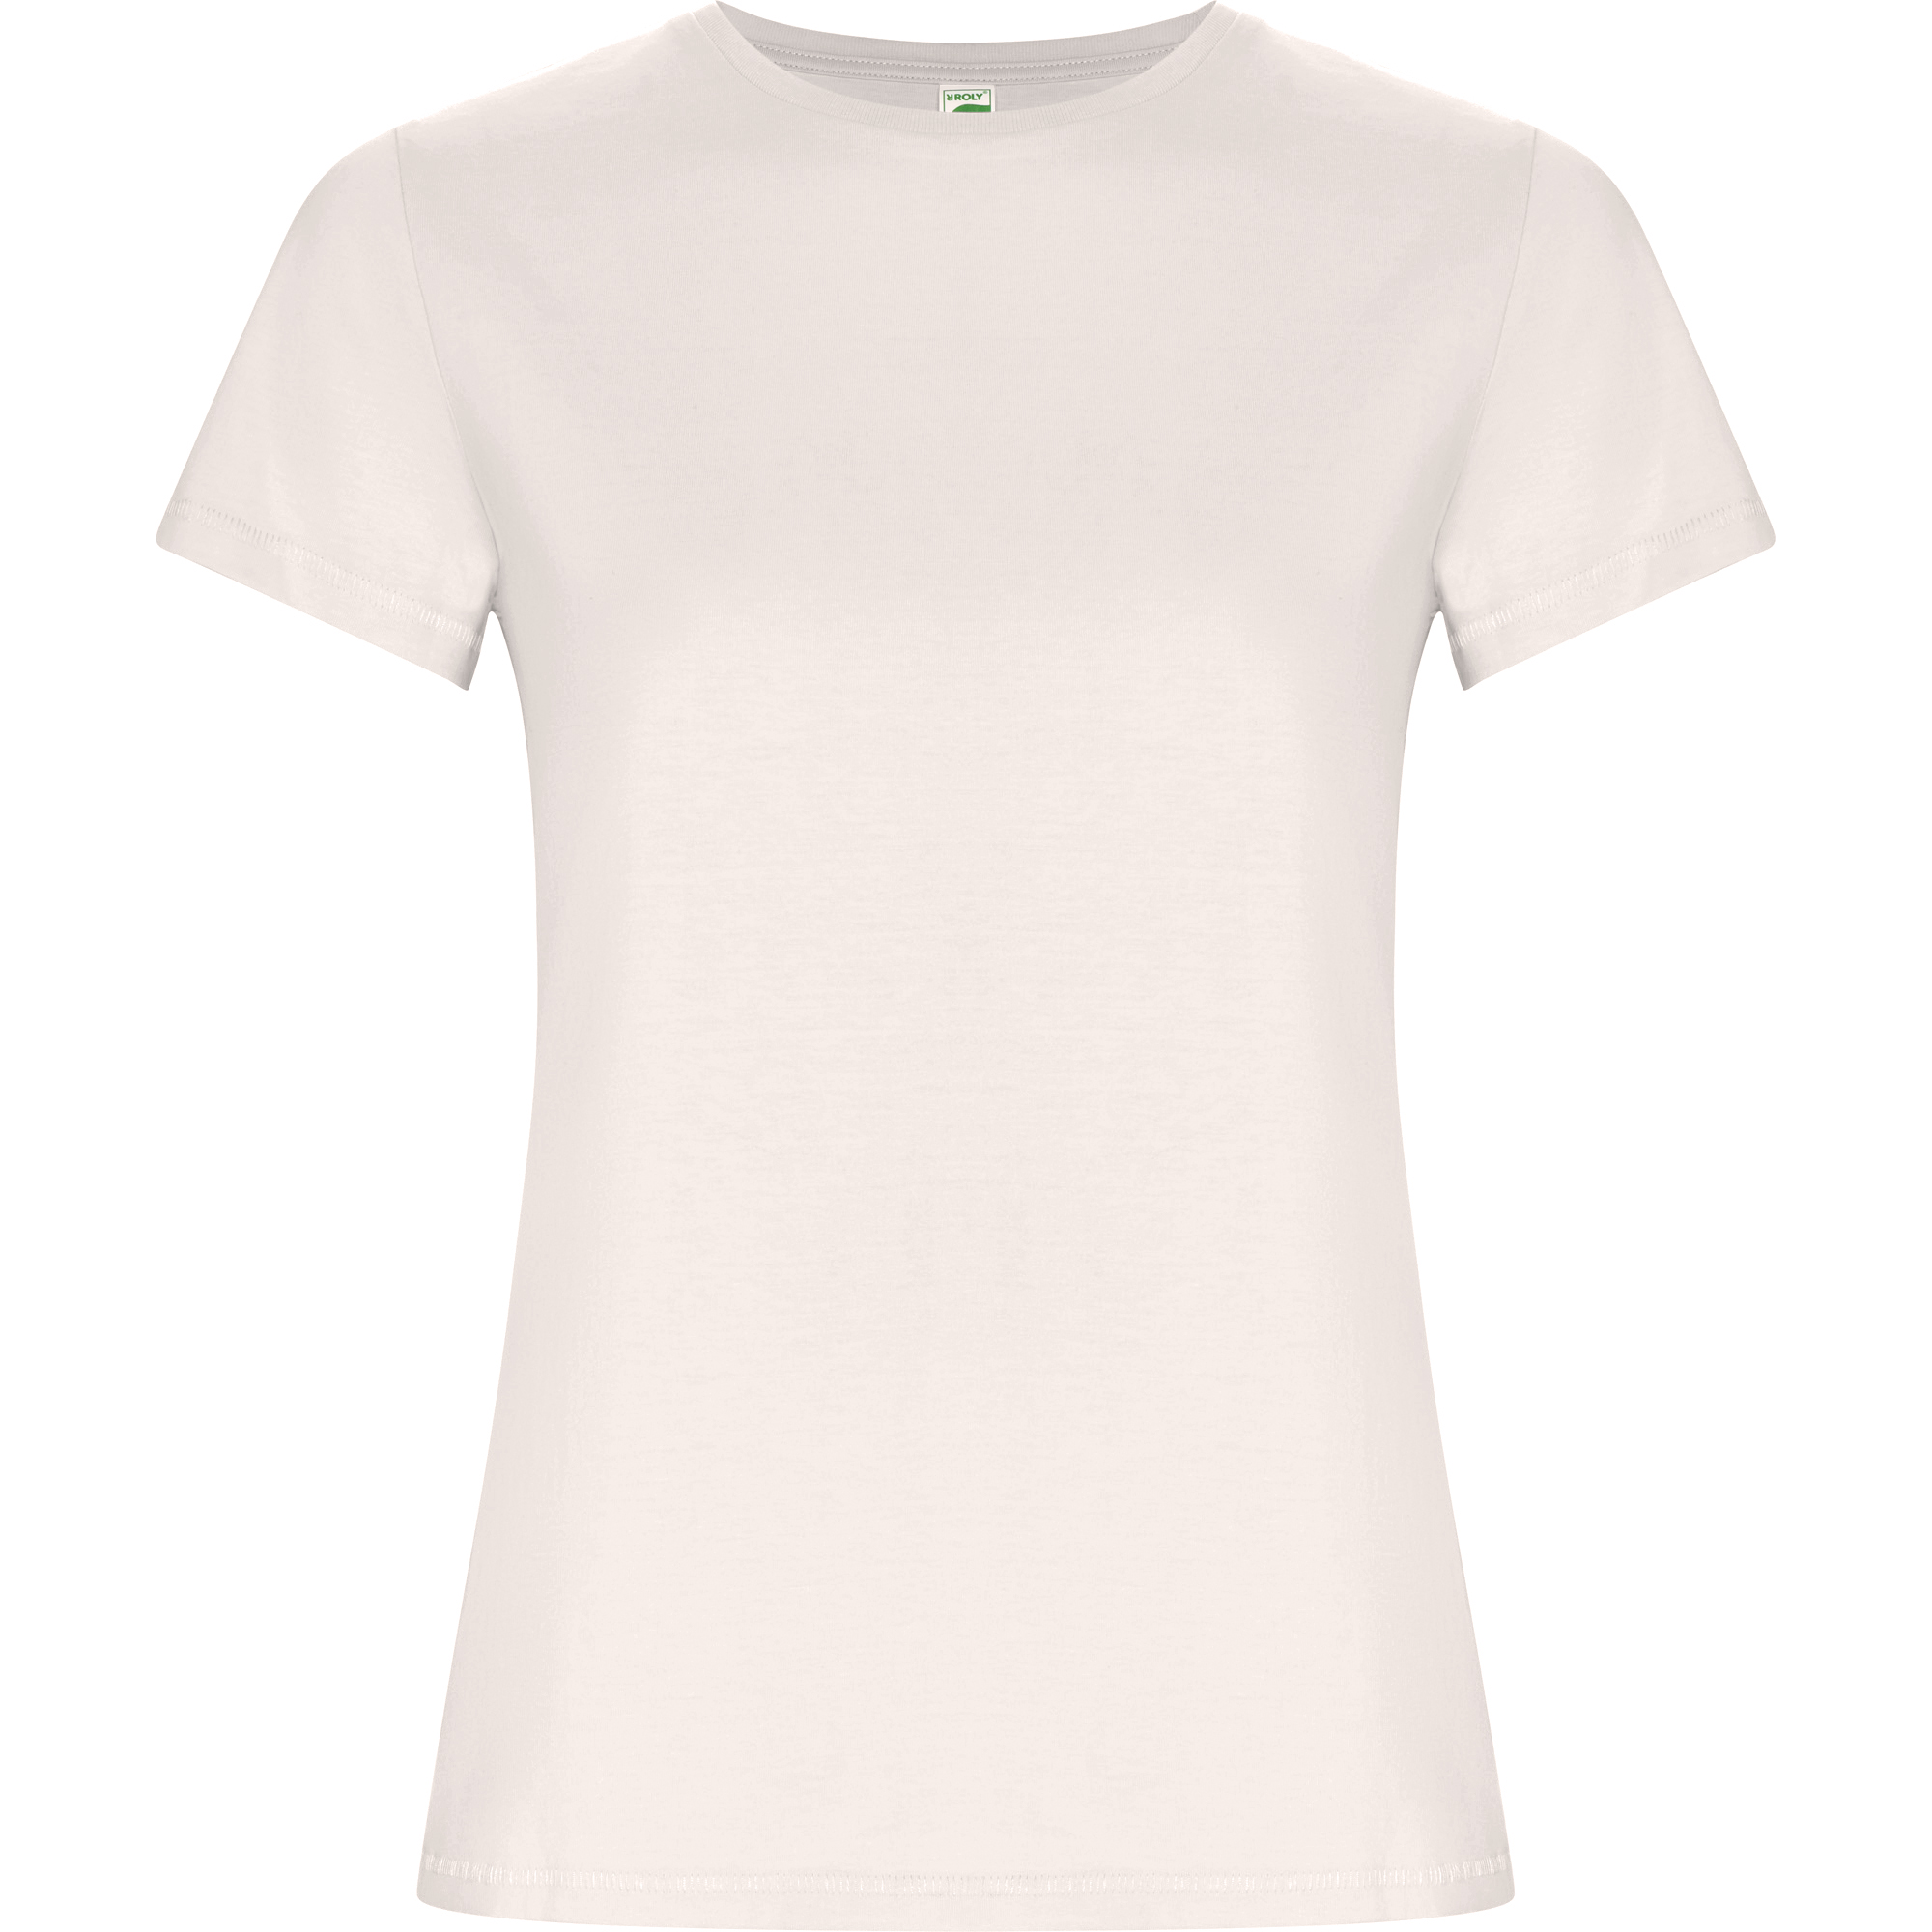 r6696-roly-golden-woman-t-shirt-in-cotone-organico-corallo-bianco.jpg